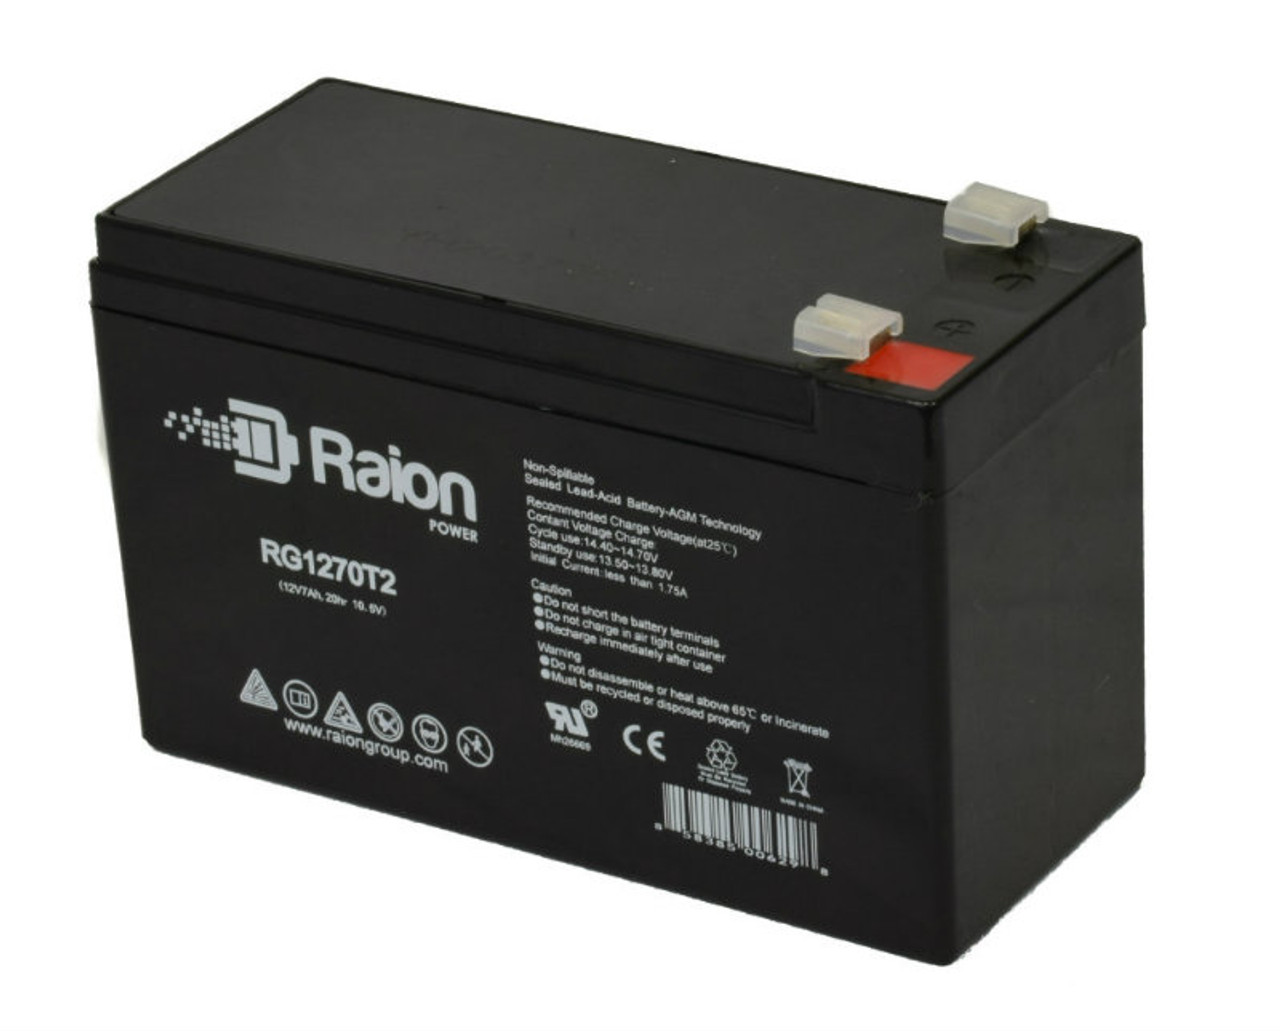 Raion Power Replacement 12V 7Ah RG1270T1 Fire Alarm Battery for Altronix AL300ULPD4CB